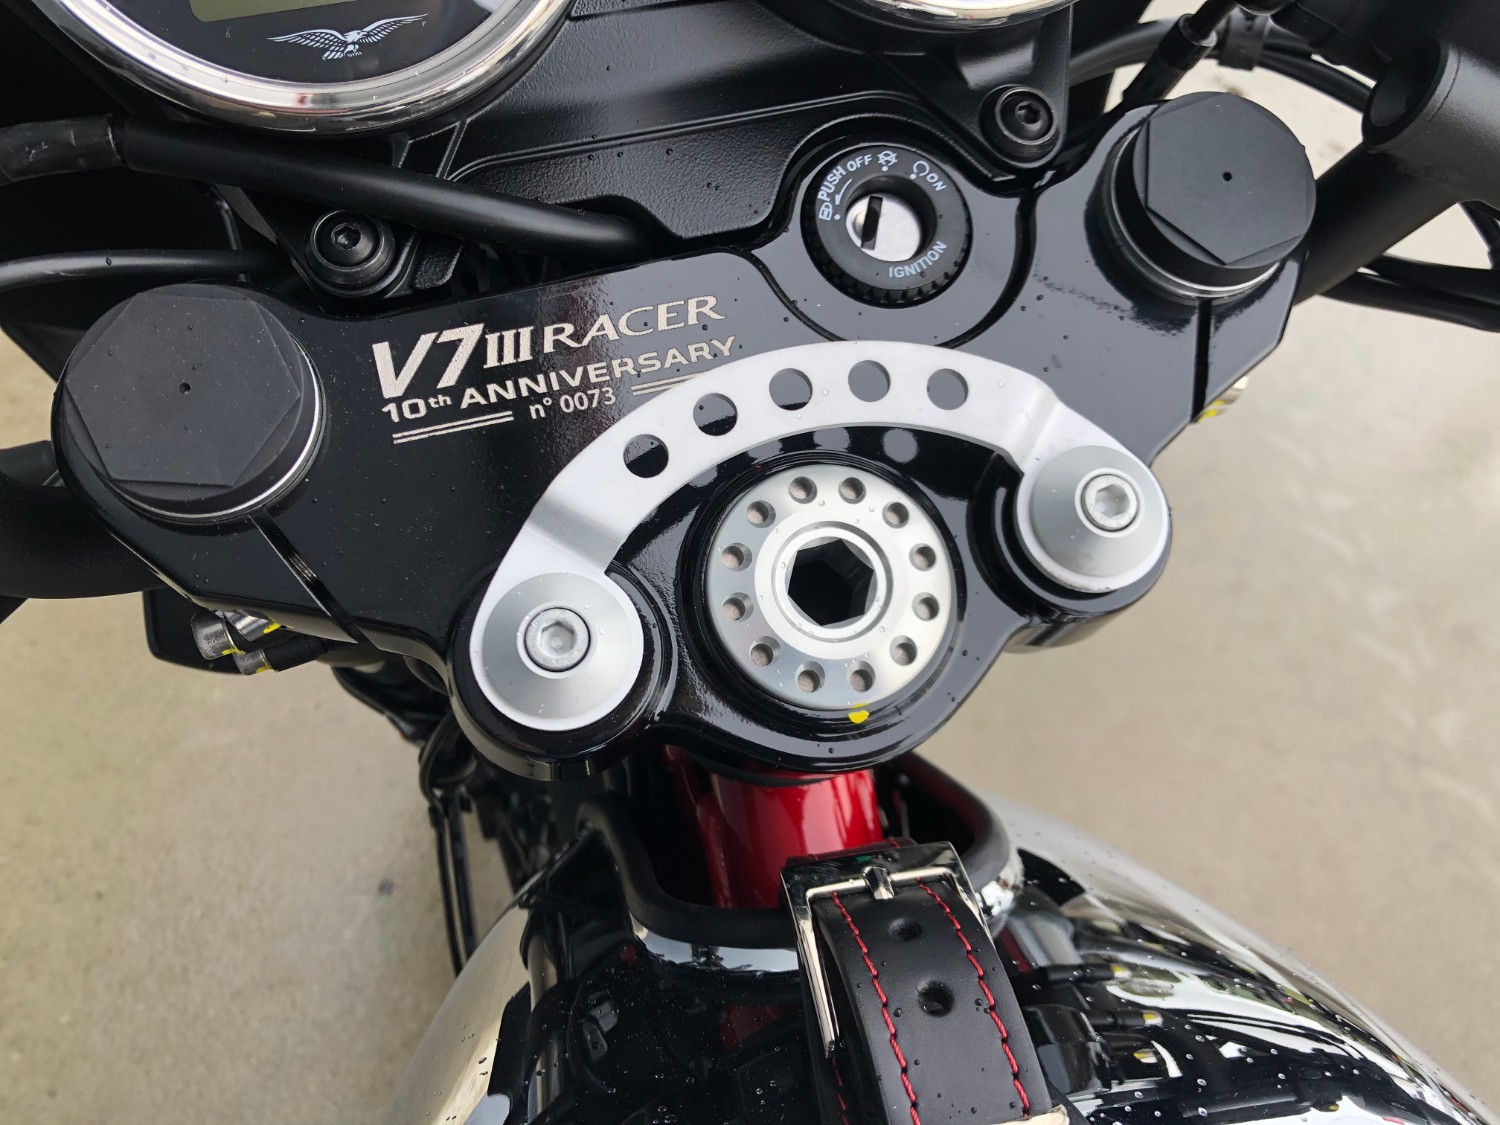 2020 Moto Guzzi V7 Racer III 10th Ann Motorcycle Image 15